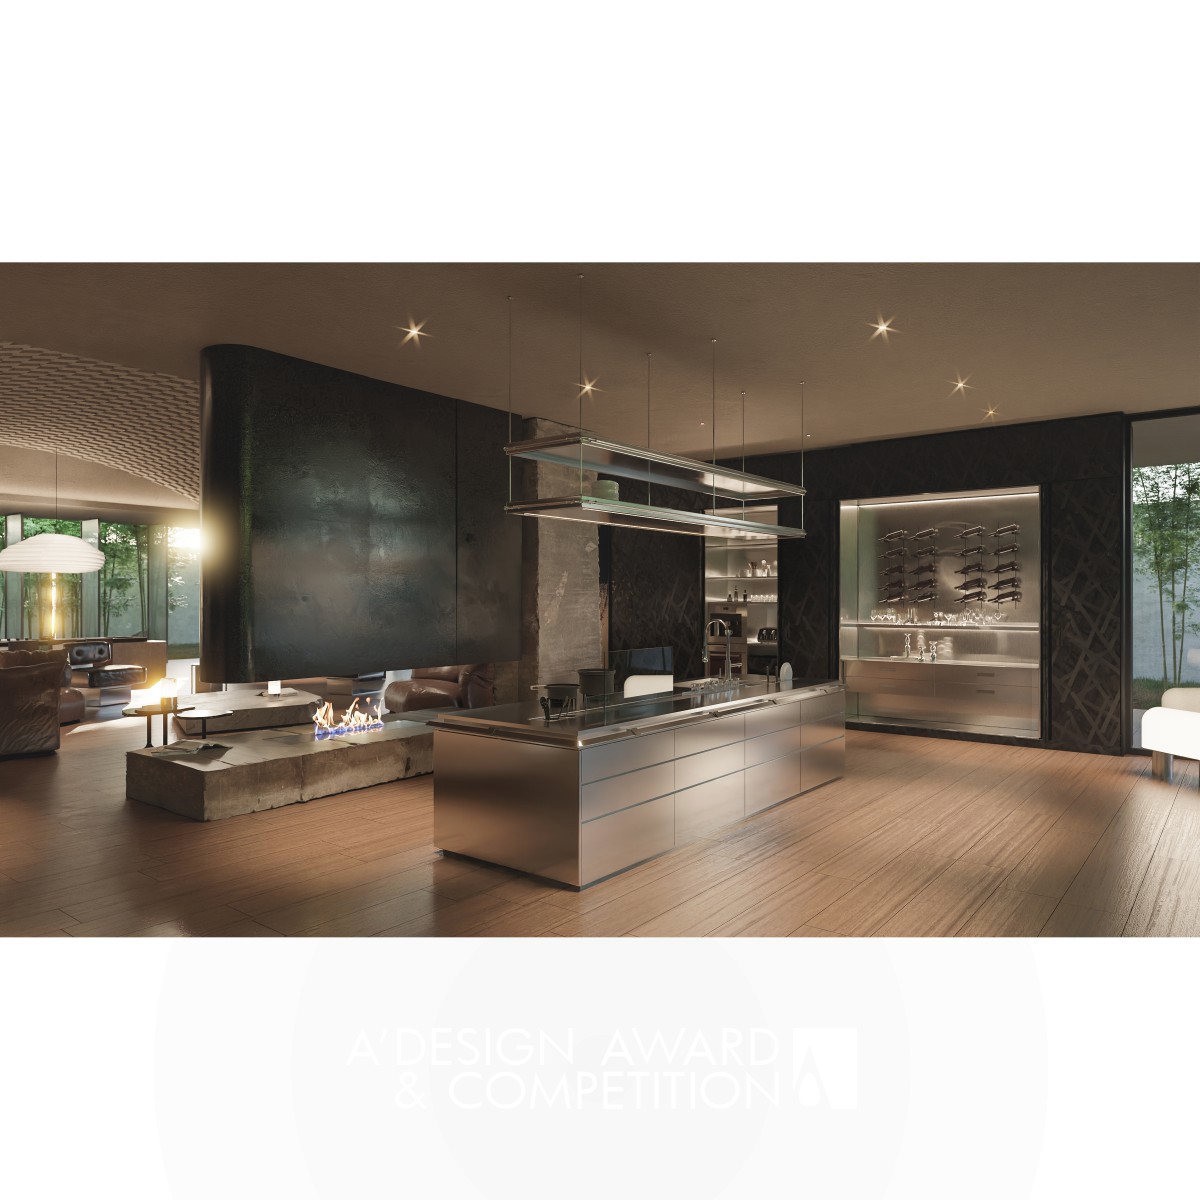 HD Mengyin Black Golden Kitchen Cabinet by Guangzhou Holike Creative Home Co.,Ltd.